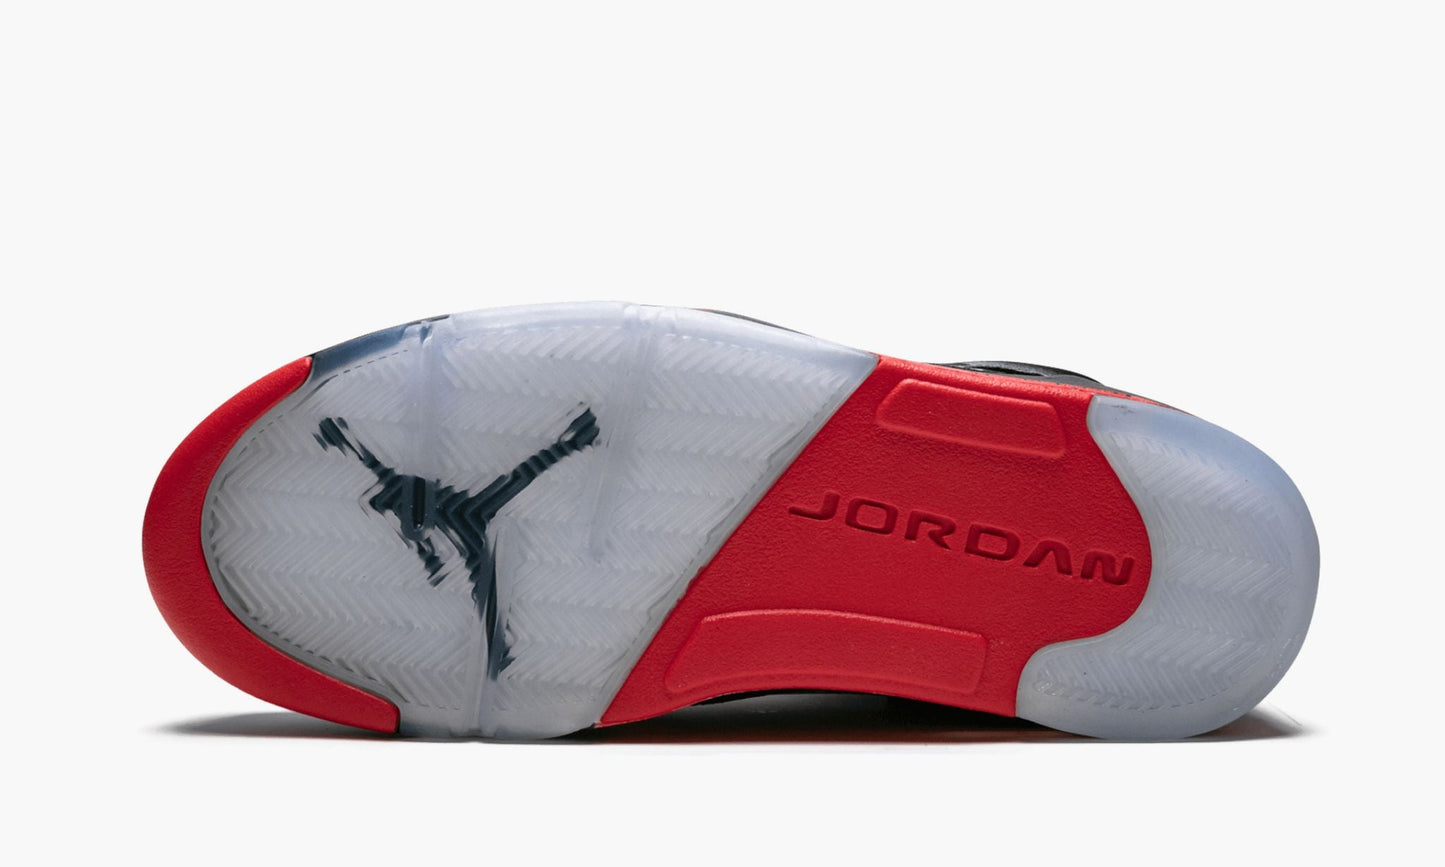 Air Jordan 5 Retro "Satin Bred"